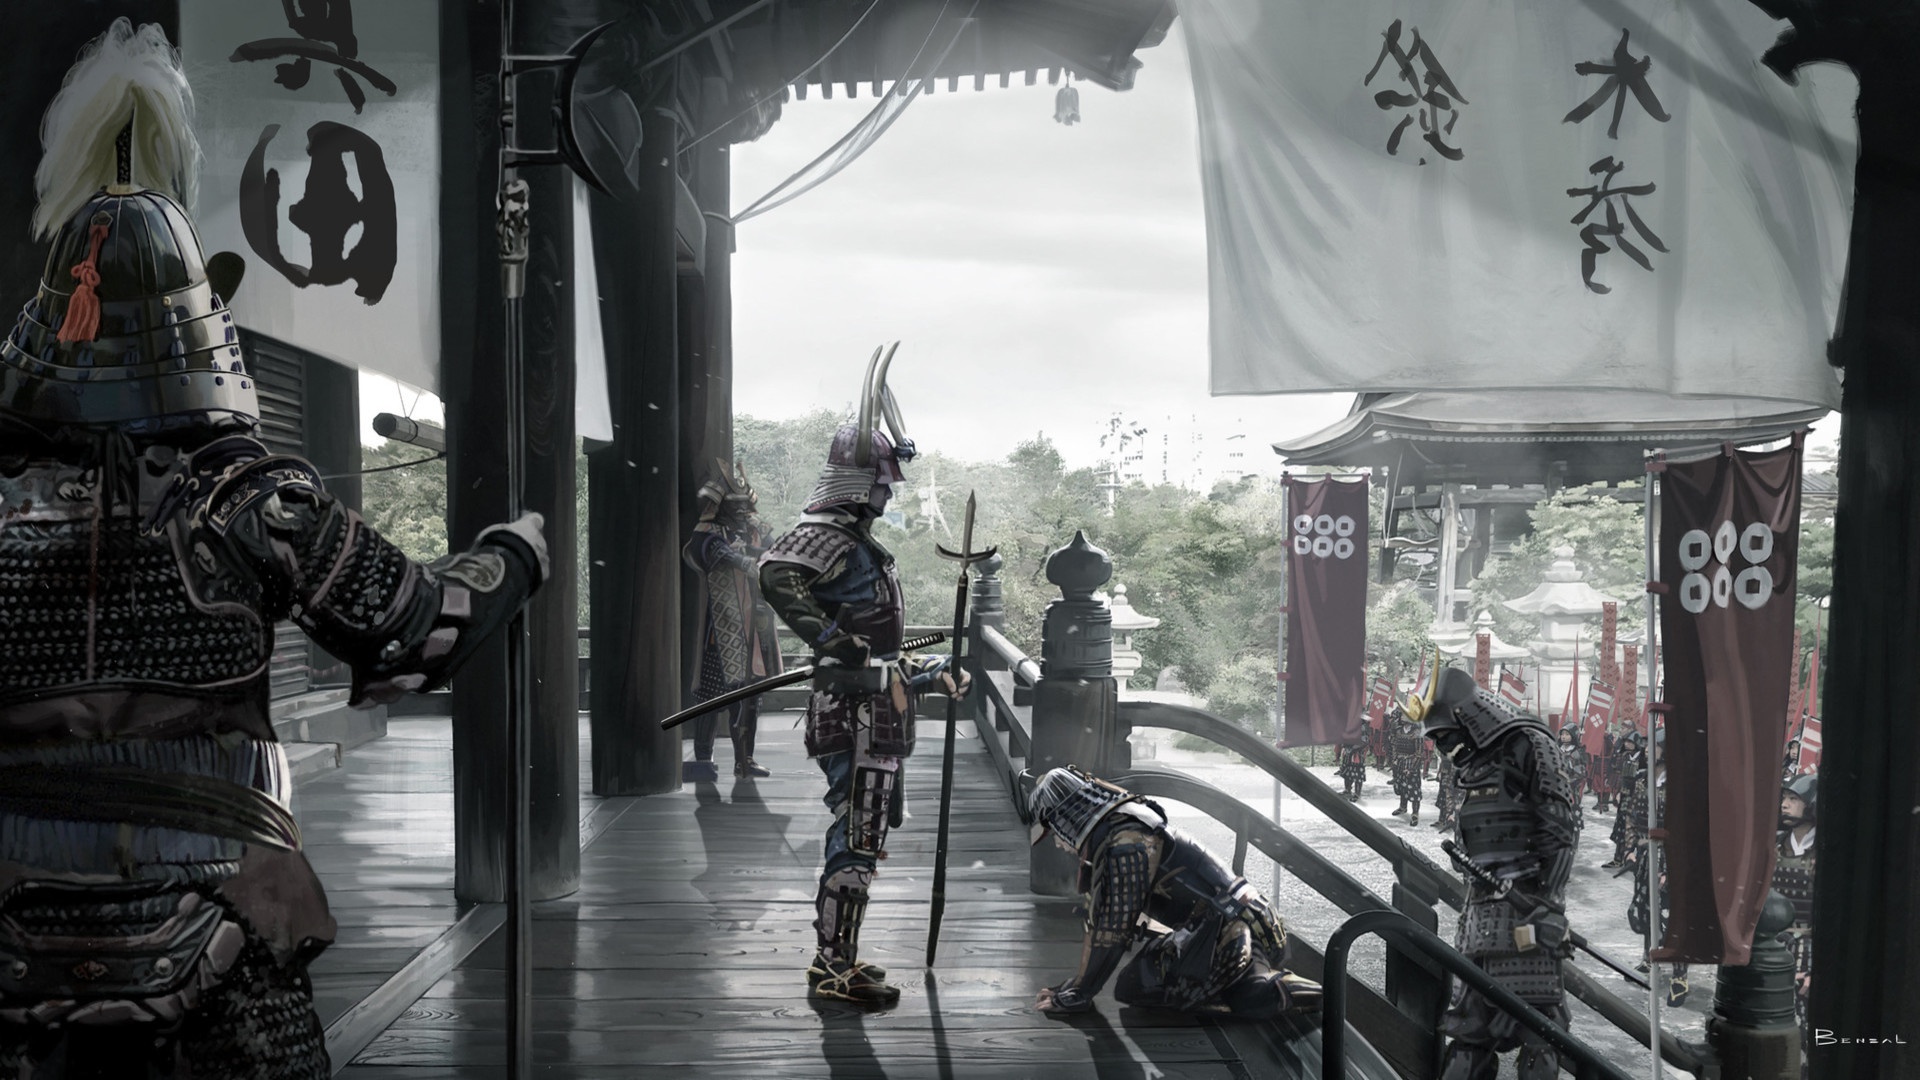 Fantasy Samurai HD Wallpaper by David Benzal